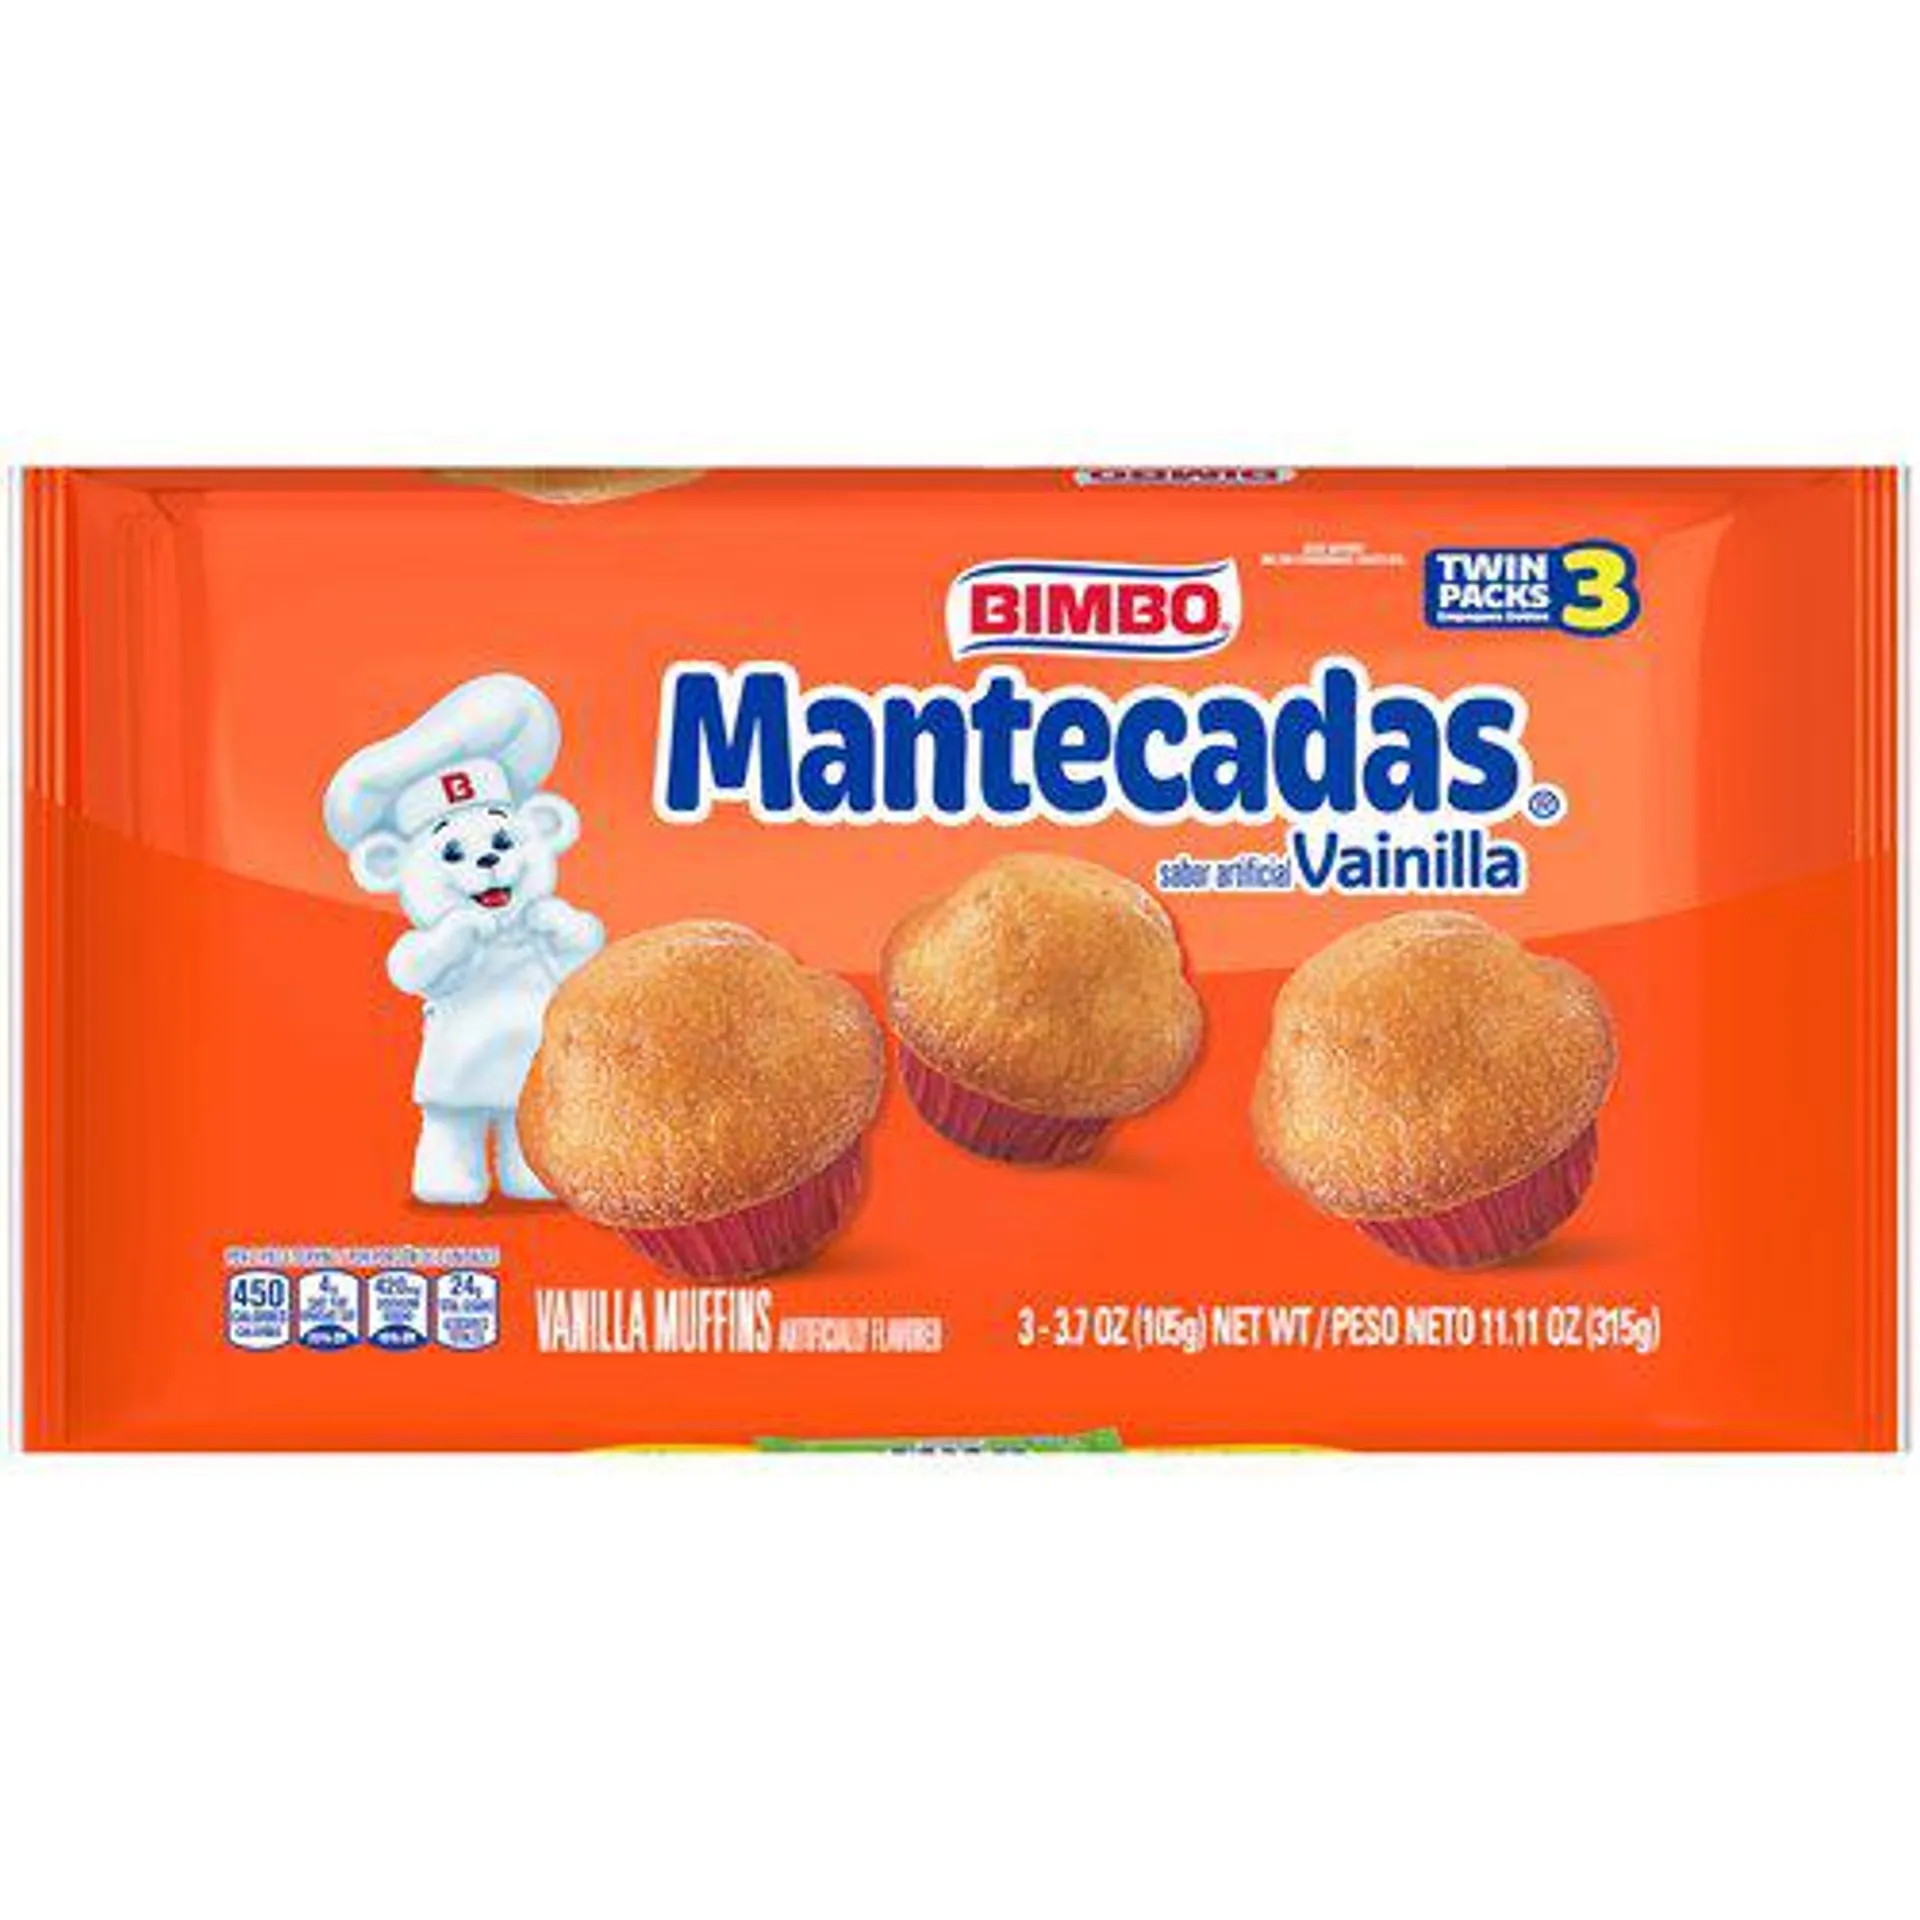 Bimbo Mantecadas Muffins, 11.11 oz